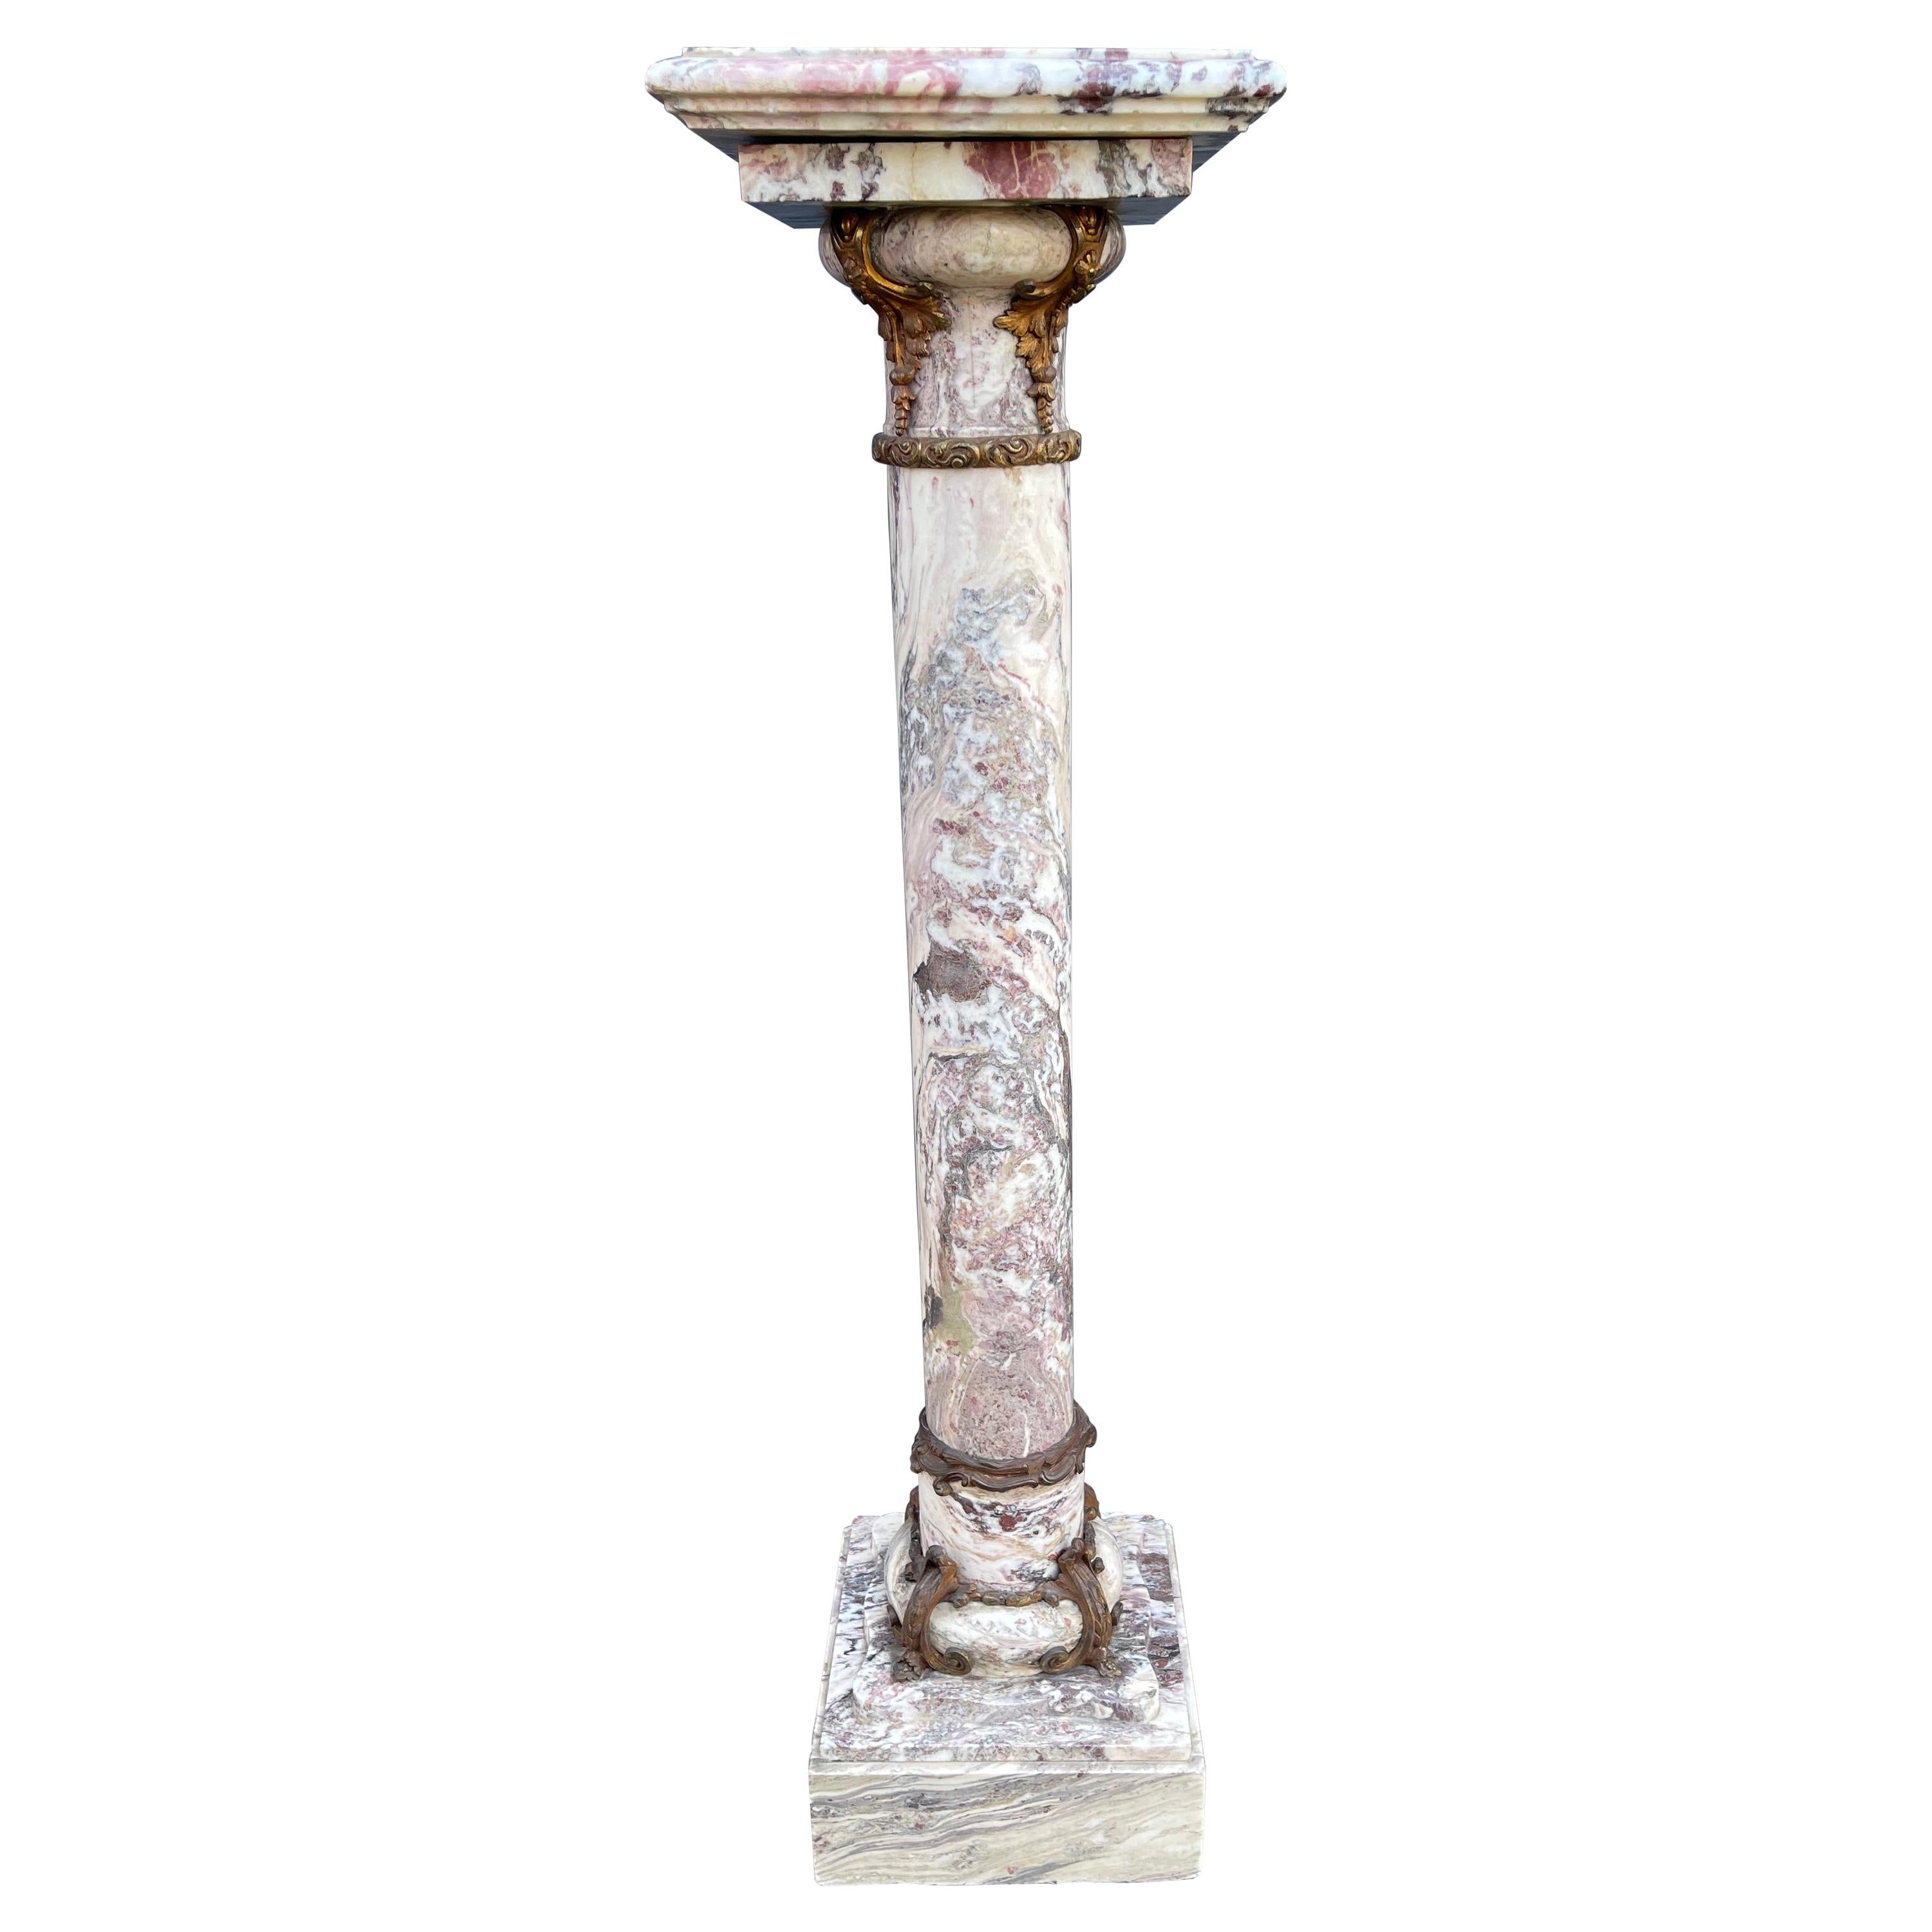 Stylish & Majestic Looking Late 19th Century, Marble & Bronze Pedestal / Column